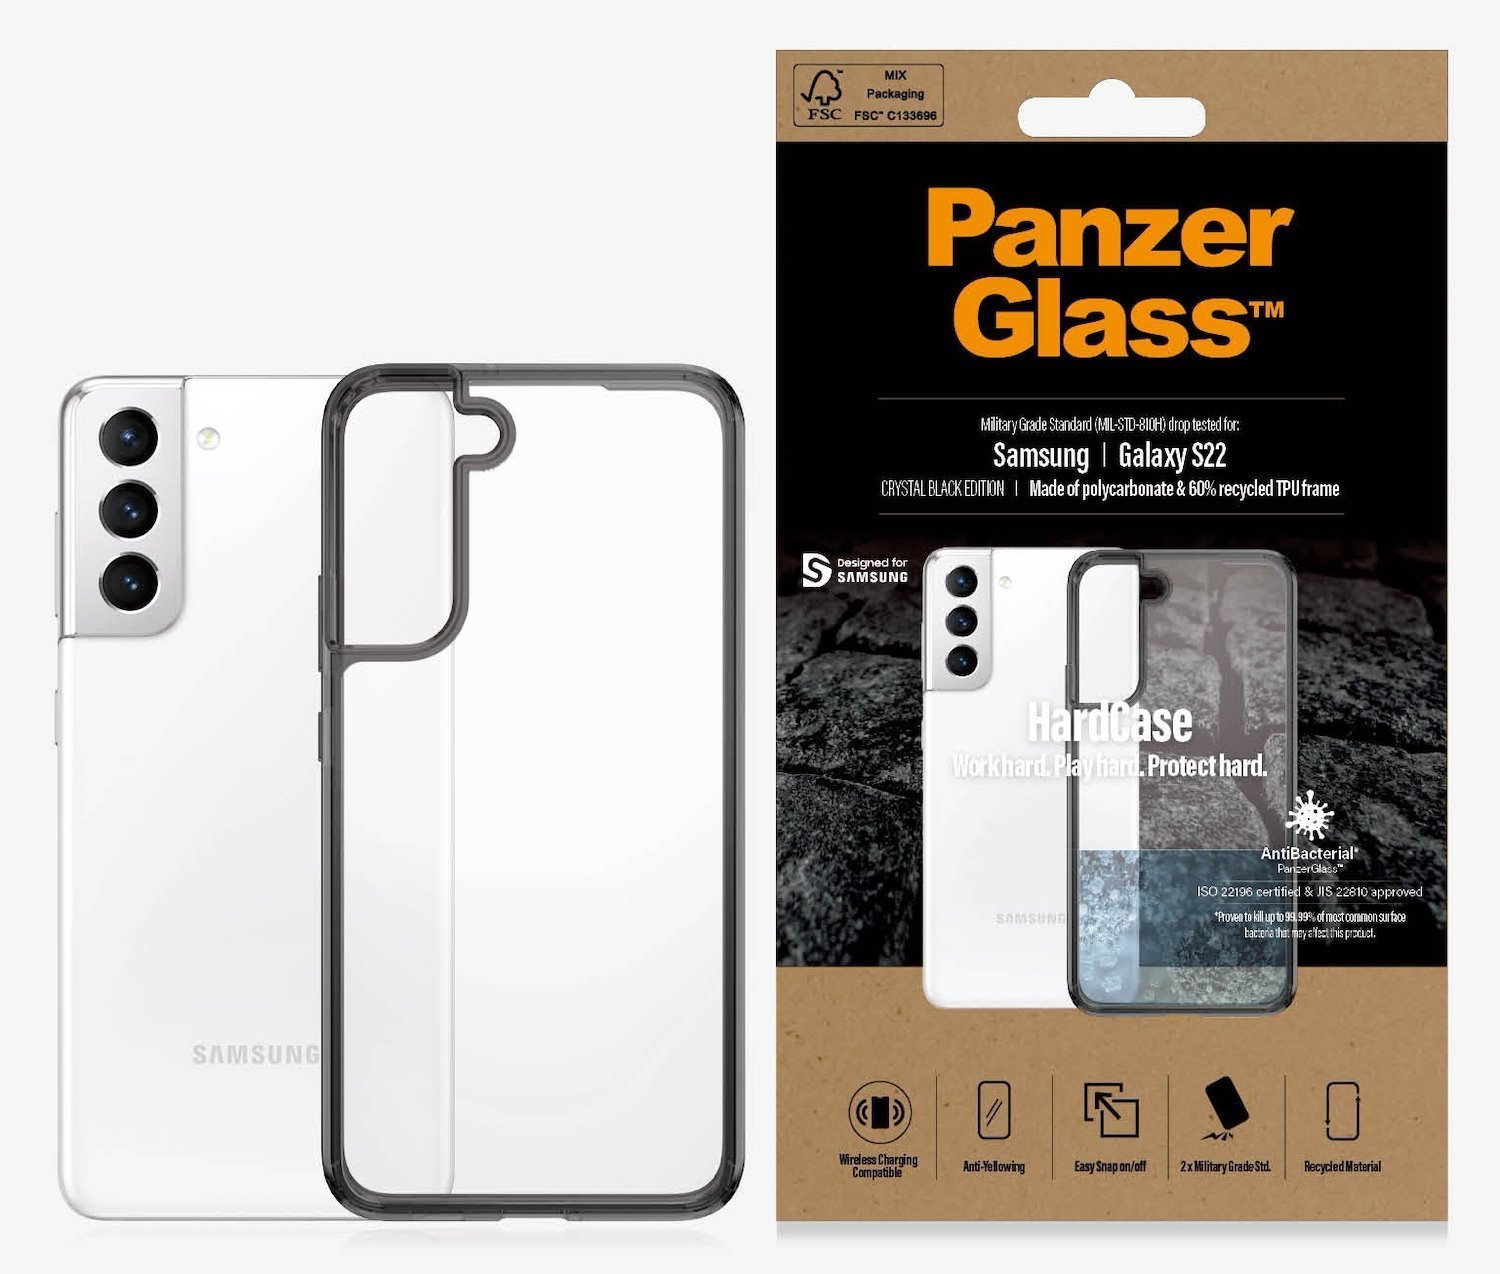 PanzerGlass Samsung Galaxy S22 5G (6.1') HardCase - Smokey Black (0371), 2X Military Grade Standard,Wireless Charging Compatible,Scratch Resistant,2YR